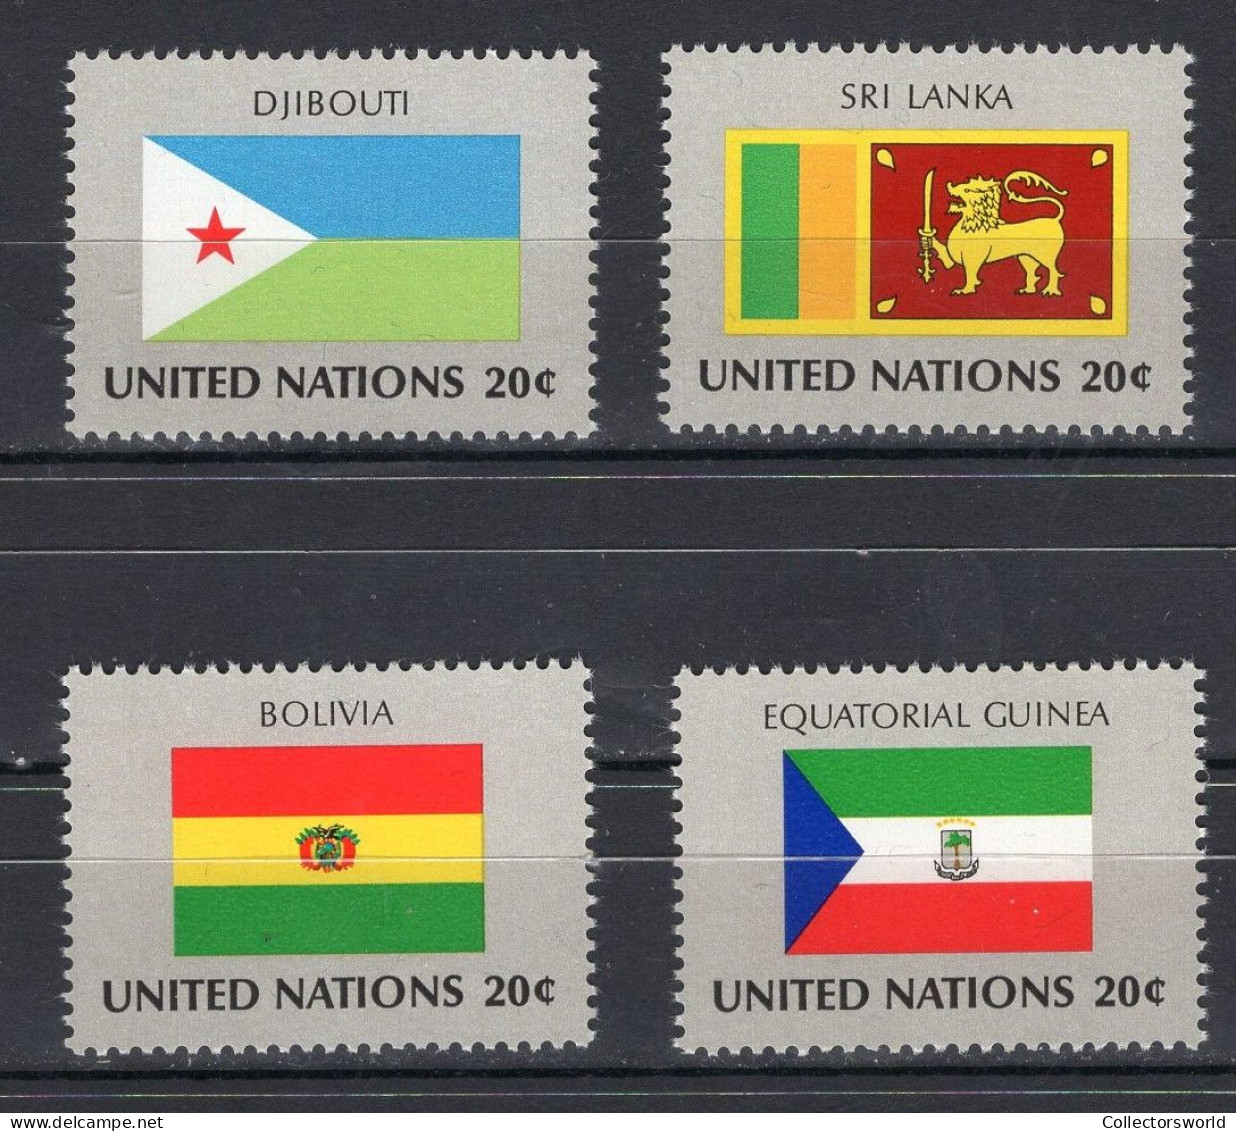 United Nations UN New York Serie 4v 1981 Flag Serie Sri Lanka Djibouti Bolivia Equatorial Guinea MNH - Ungebraucht